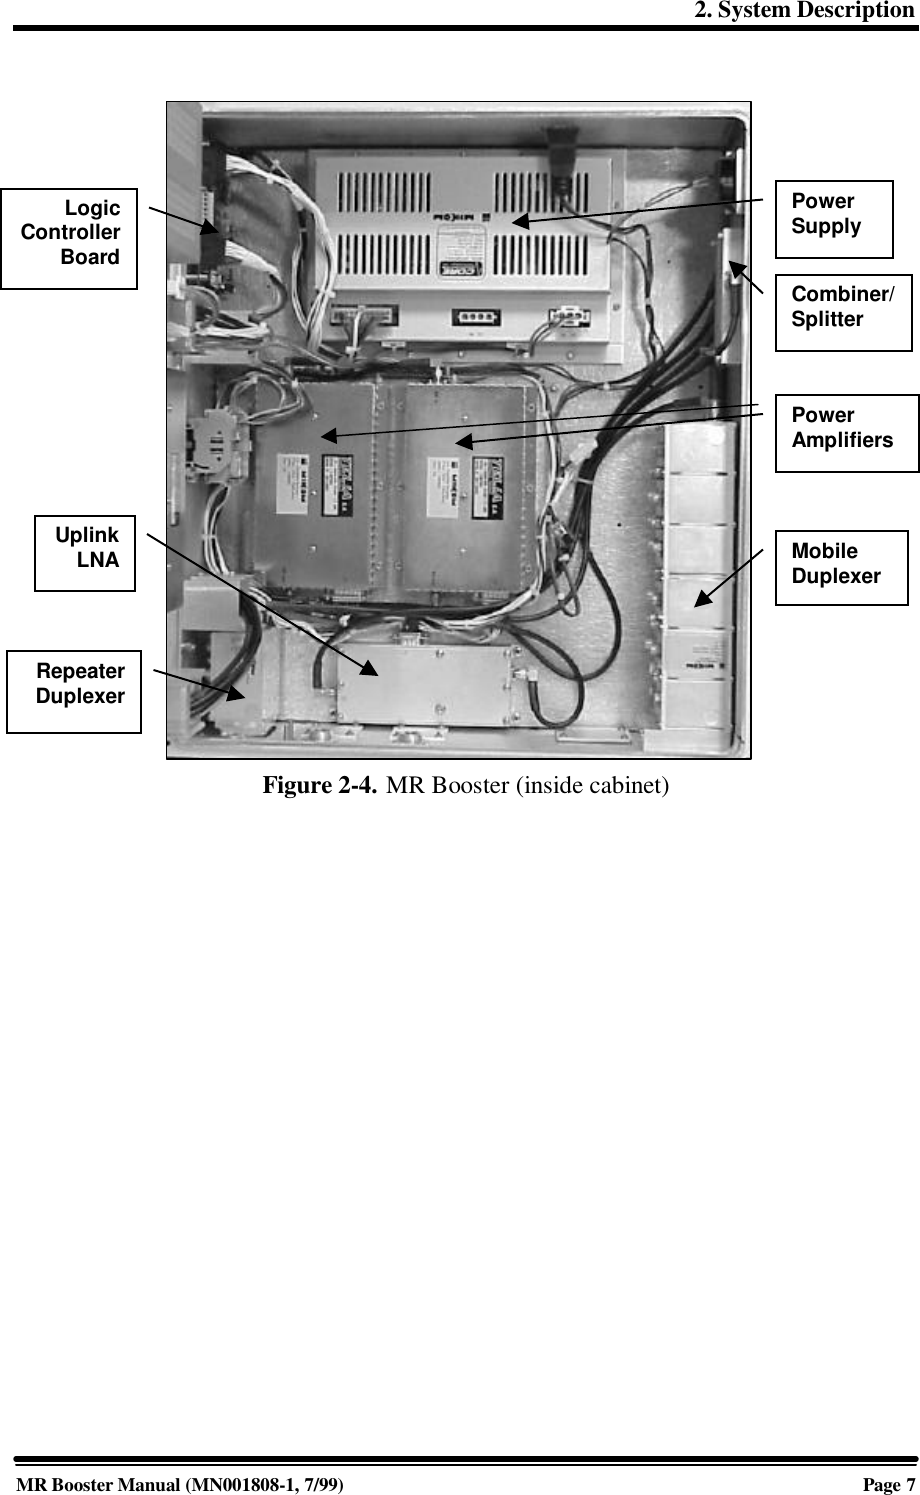 2. System DescriptionMR Booster Manual (MN001808-1, 7/99)Page 7Figure 2-4. MR Booster (inside cabinet)PowerSupplyPowerAmplifiersMobileDuplexerUplinkLNALogicControllerBoardRepeaterDuplexerCombiner/Splitter